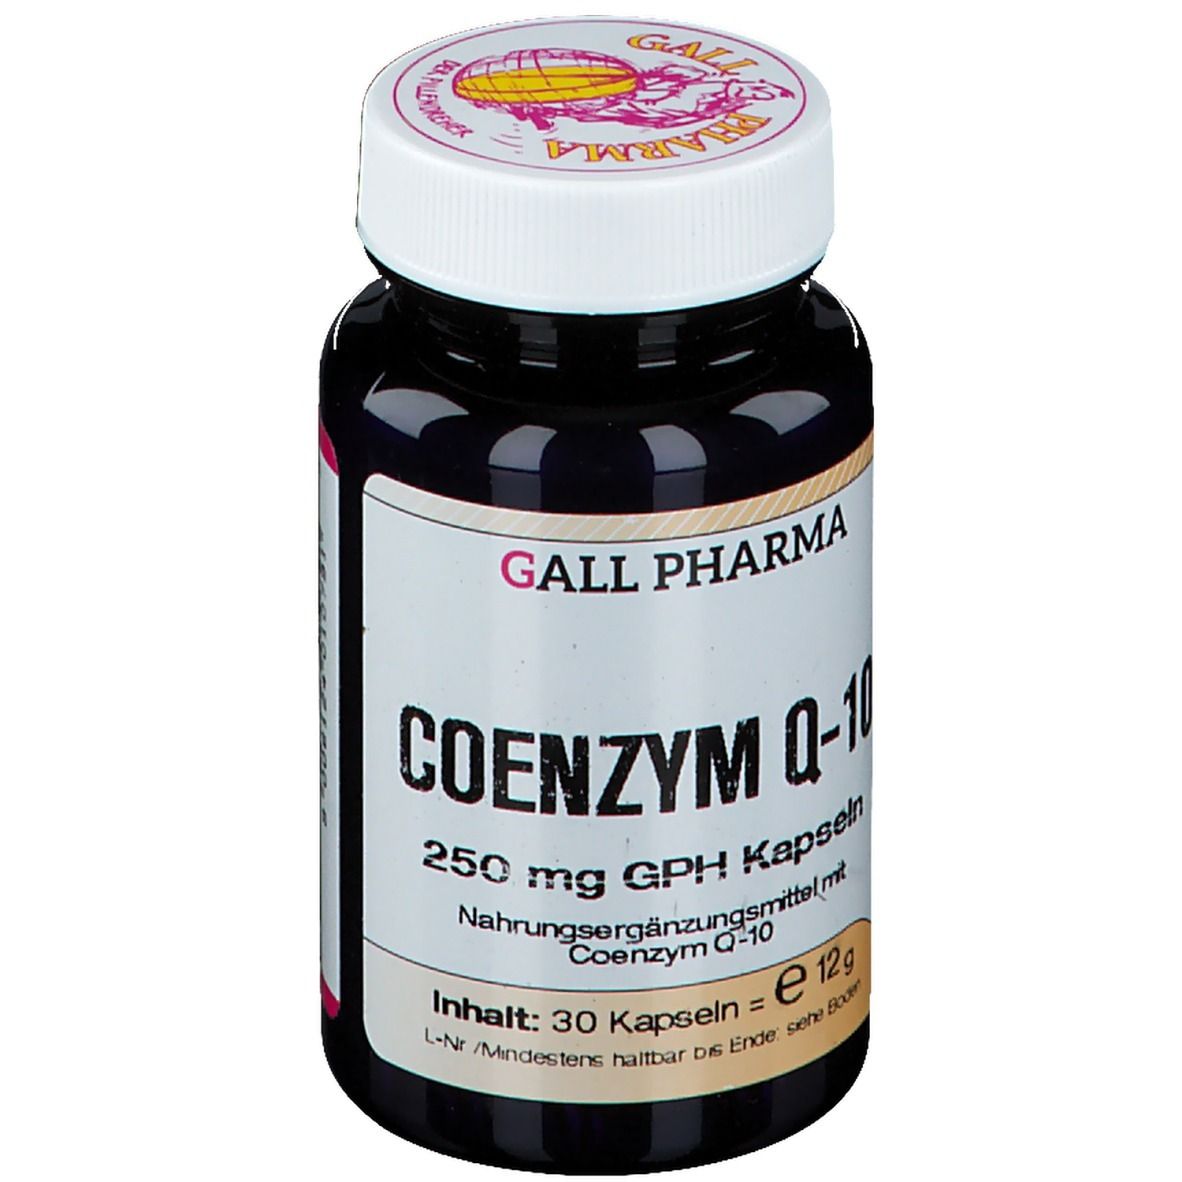 Image of GALL PHARMA Coenzym Q-10 250 mg GPH Kapseln